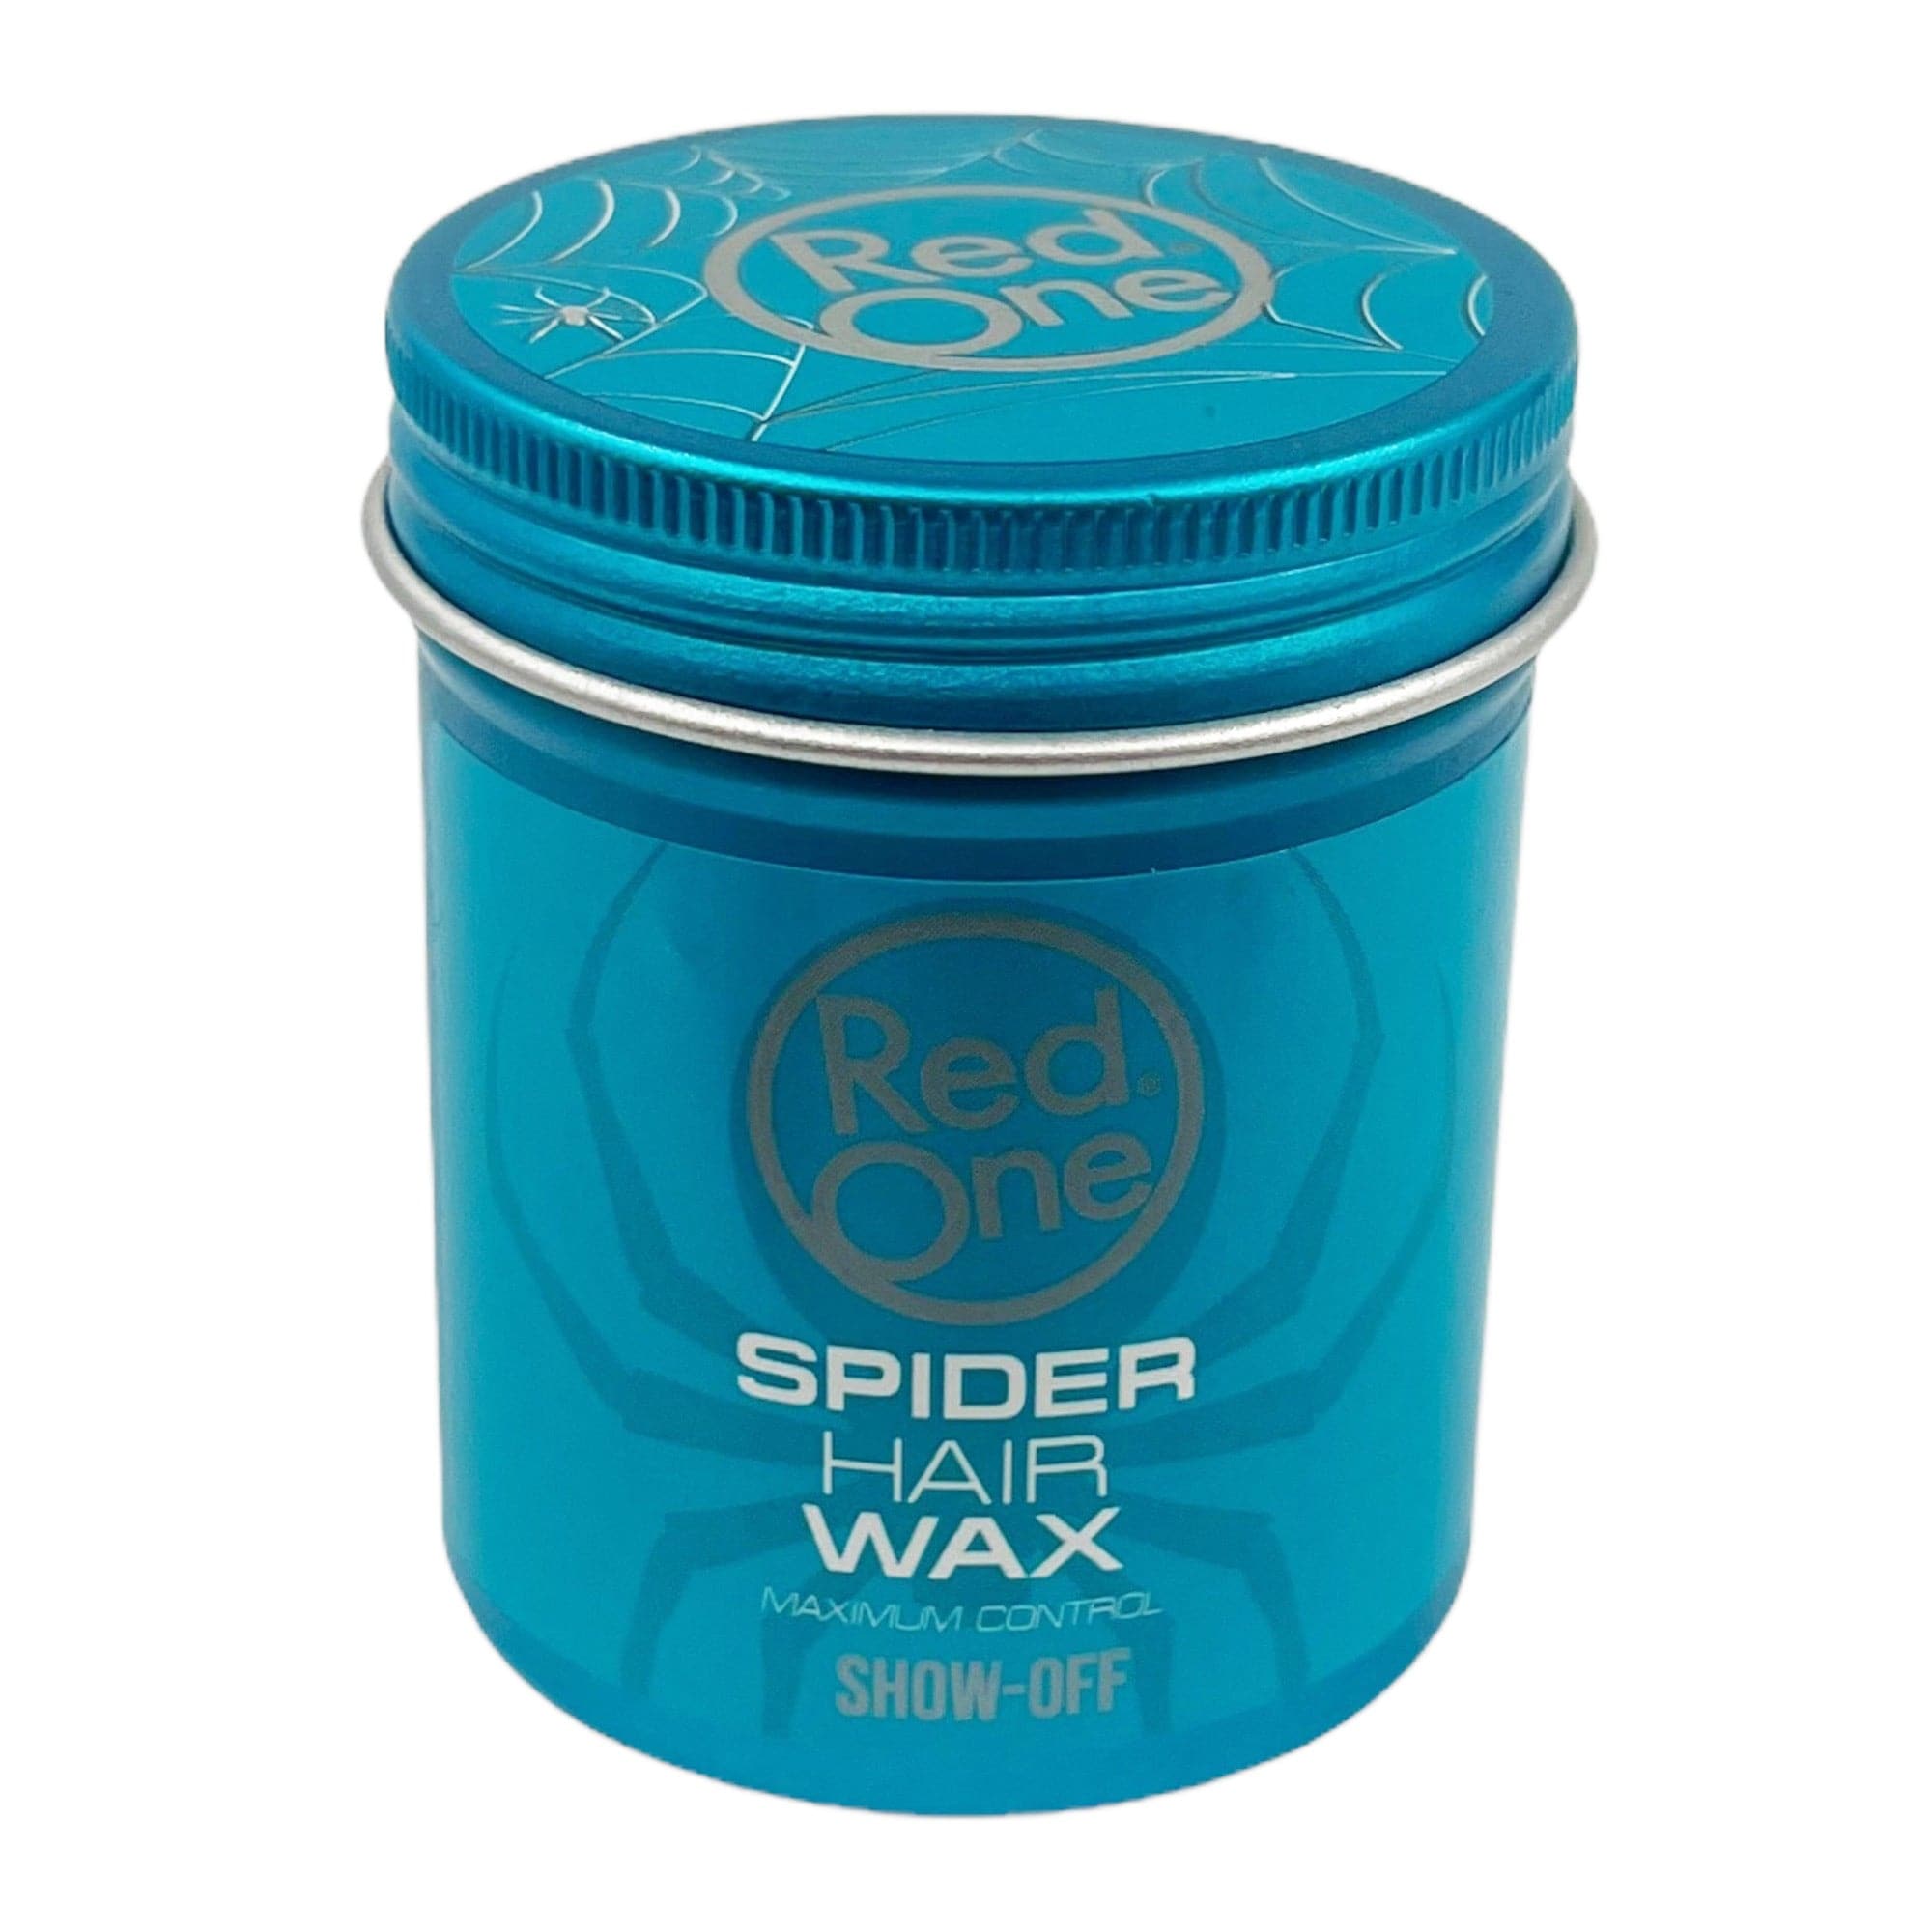 Redone - Spider Hair Wax Show-off Maximum Control 100ml